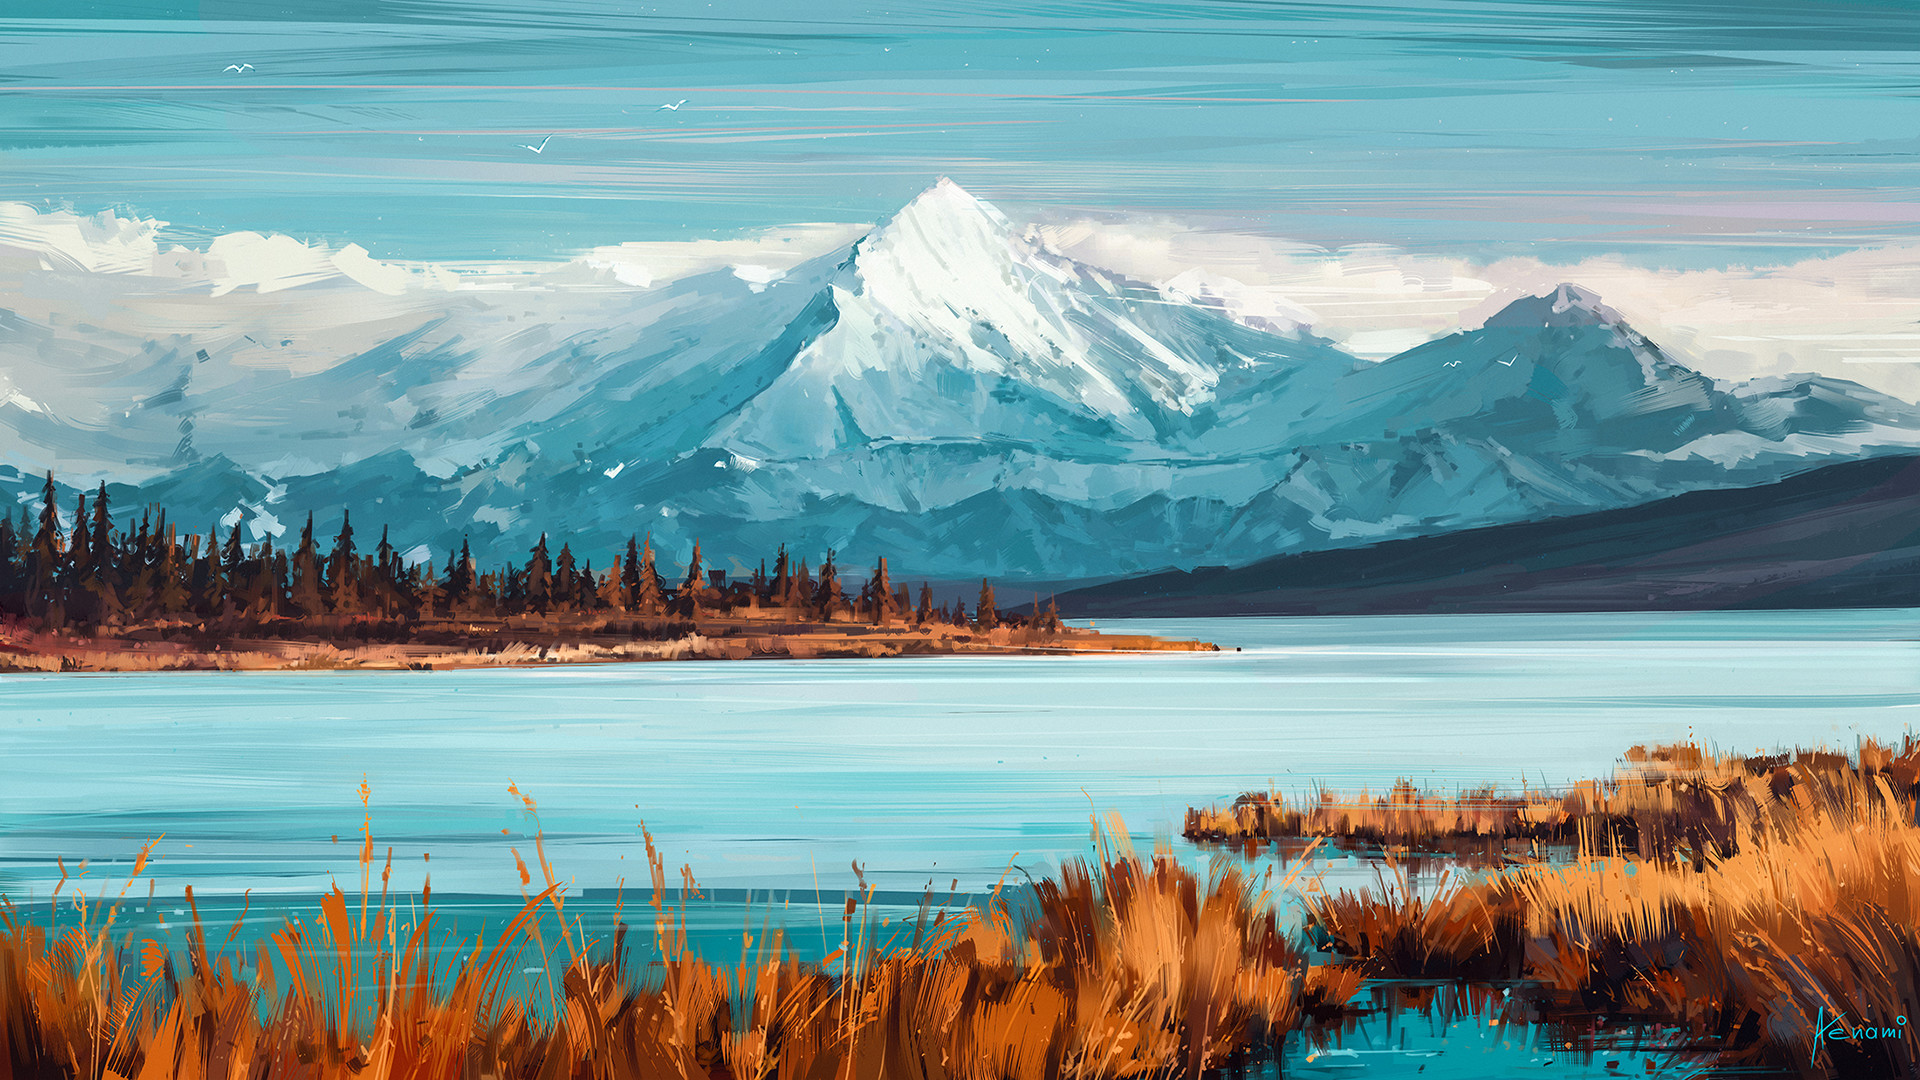 General 1920x1080 Aenami digital art mountains lake river landscape cyan orange white artwork